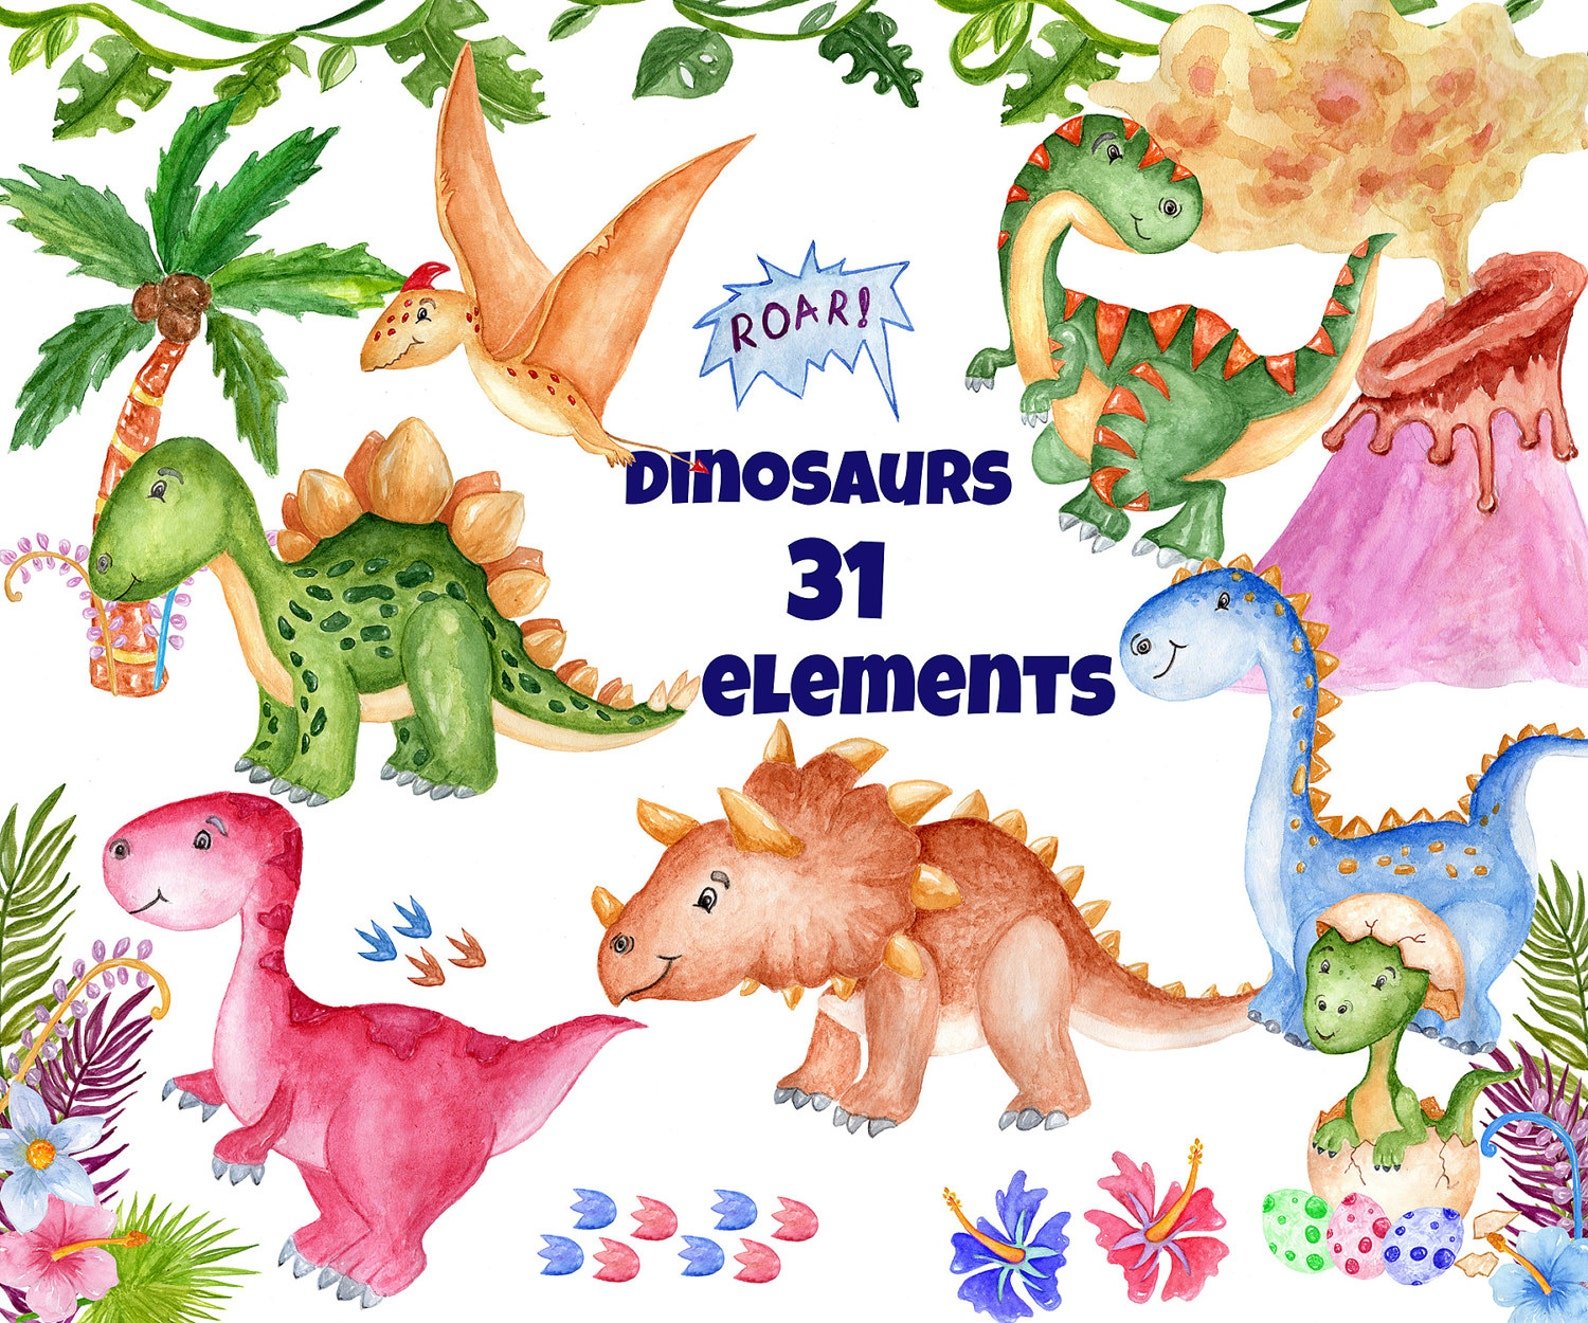 Плакат на тему динозавров